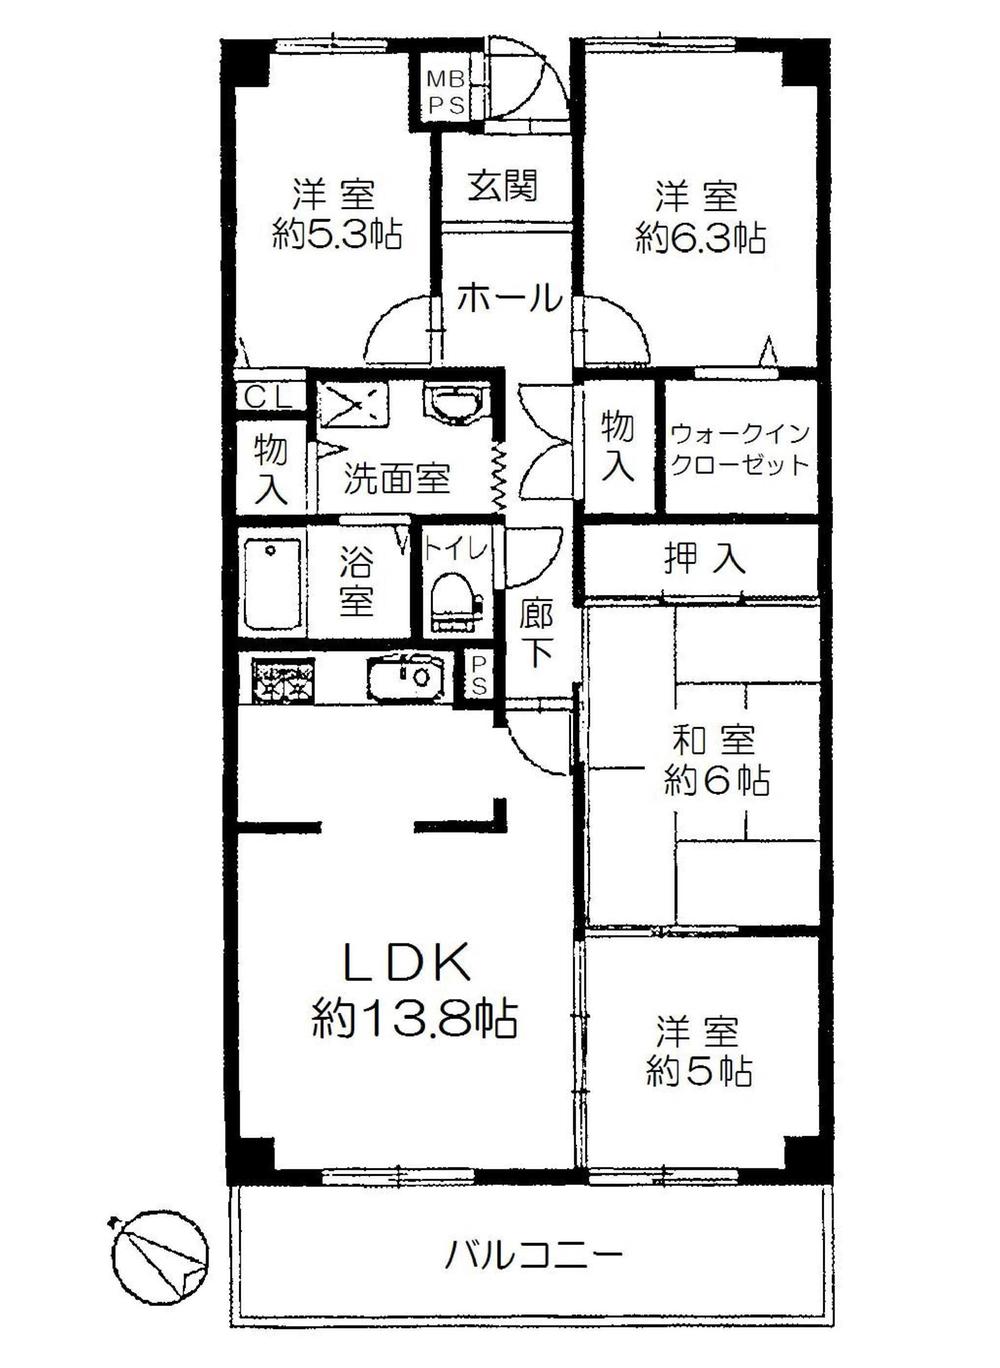 Floor plan. 4LDK, Price 19,800,000 yen, Occupied area 80.19 sq m , Balcony area 8.82 sq m